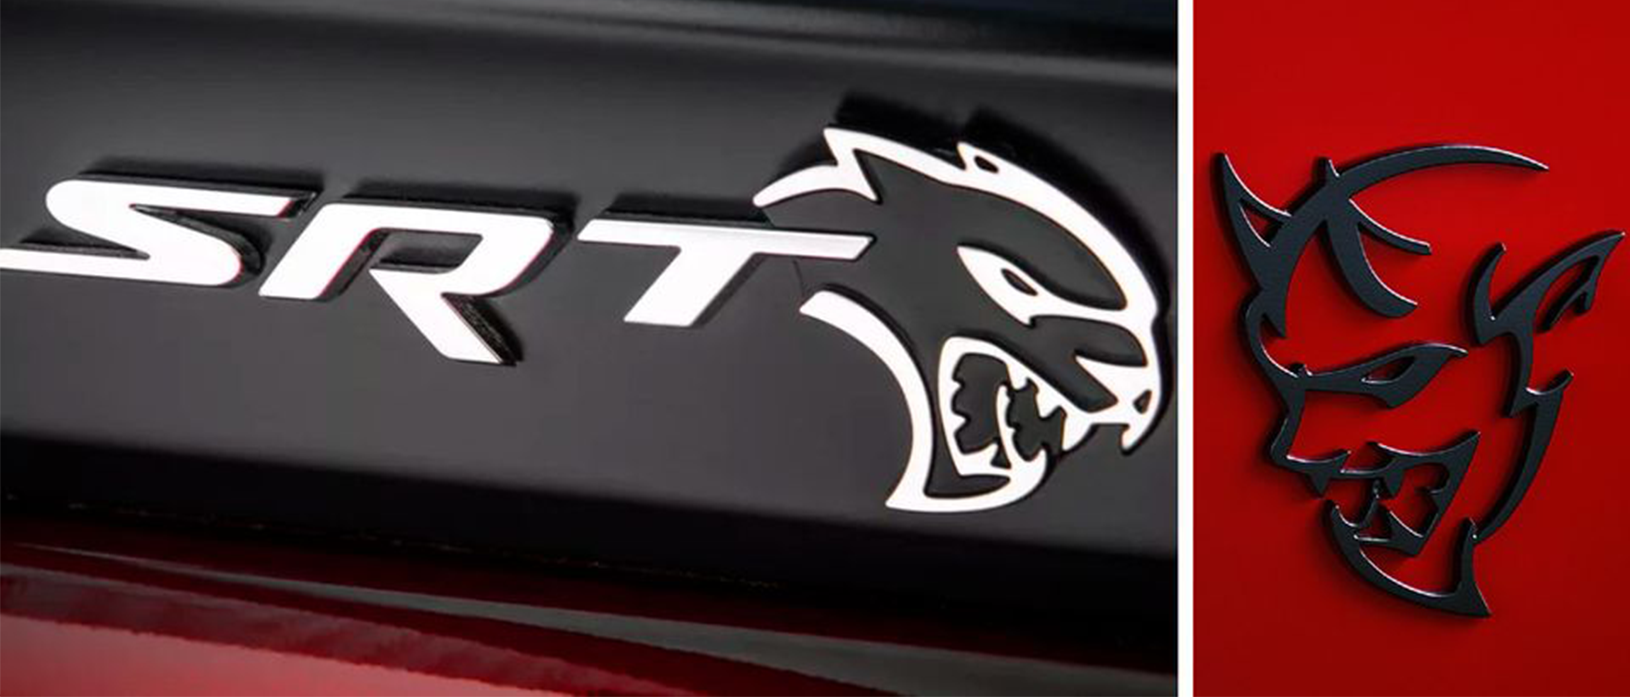 SRT Demon and SRT Hellcat logos